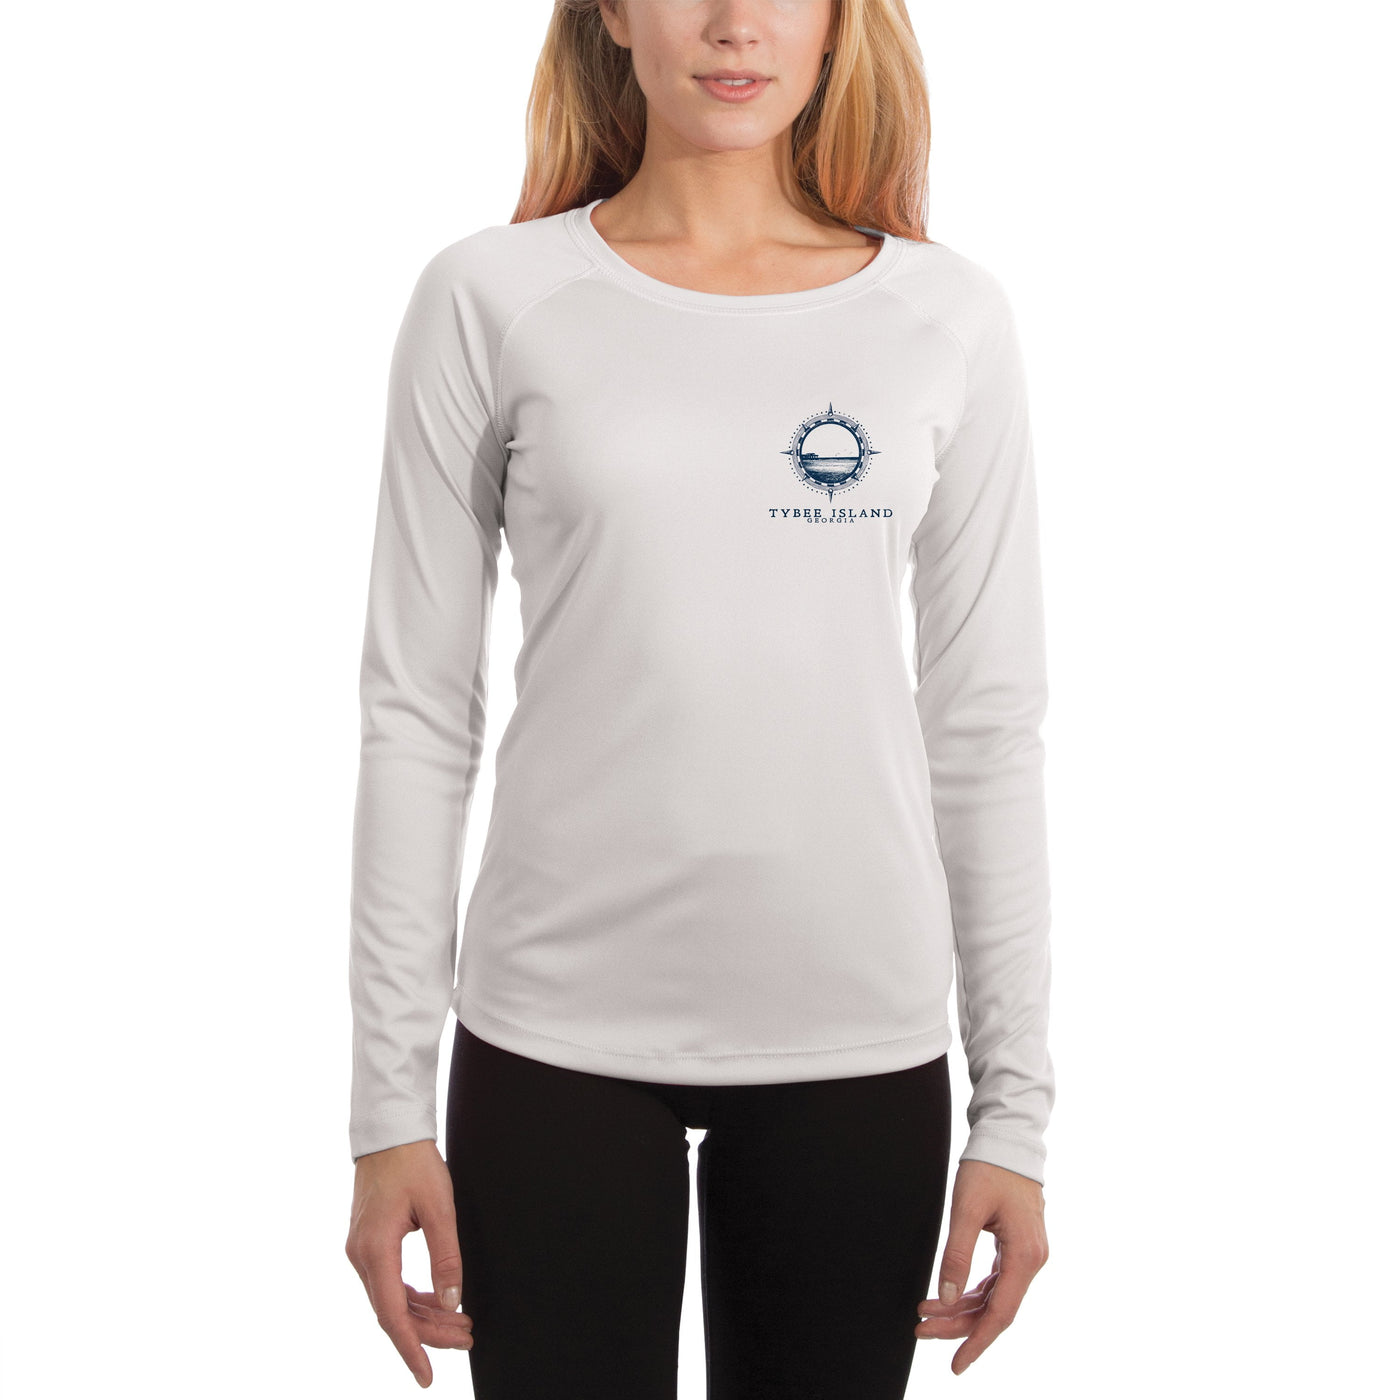 Compass Vintage Tybee Island Women's UPF 50+ Classic Fit Long Sleeve T-shirt